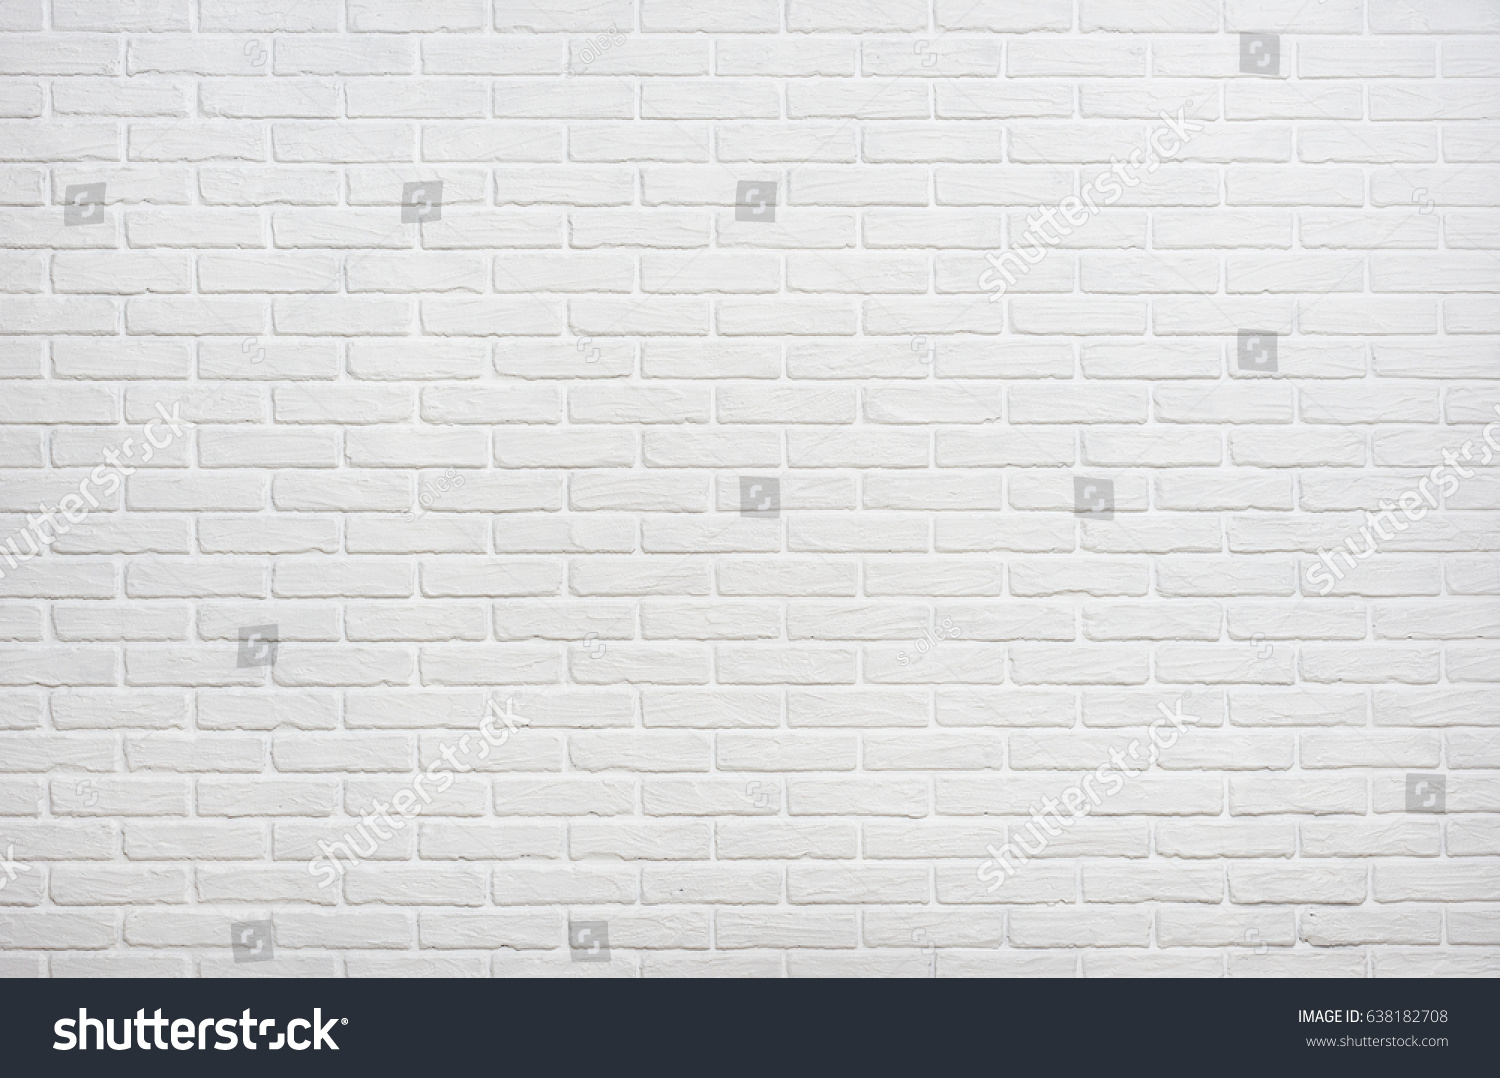 PowerPoint Template: bricks white brick wall background (nkpipjohp)